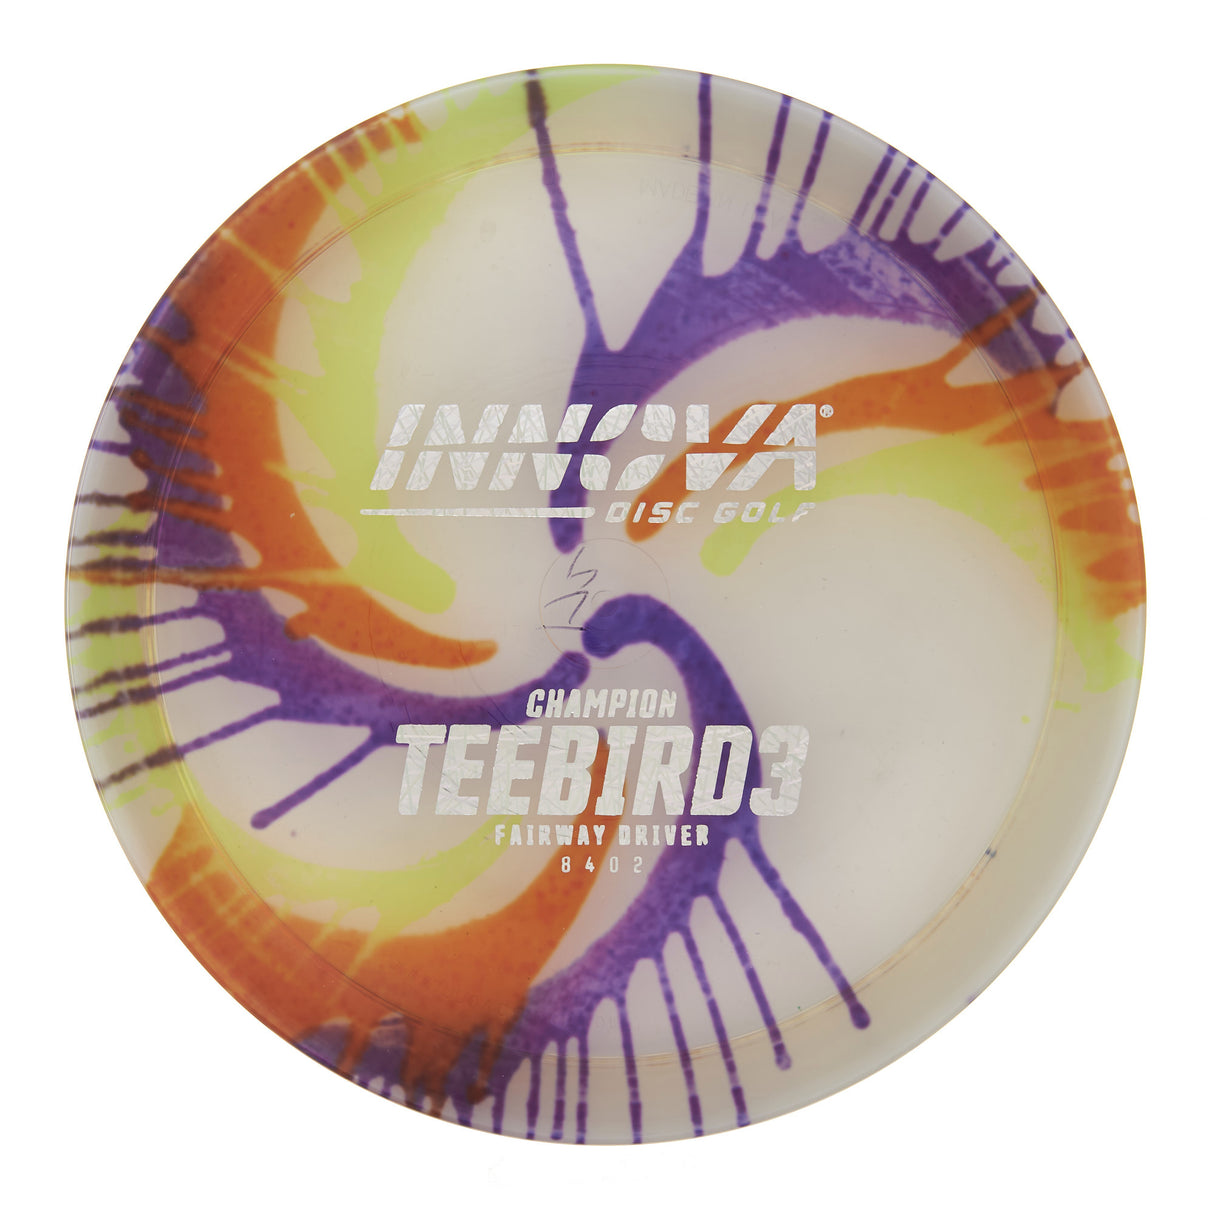 Innova Teebird3 - I-Dye Champion 172g | Style 0009